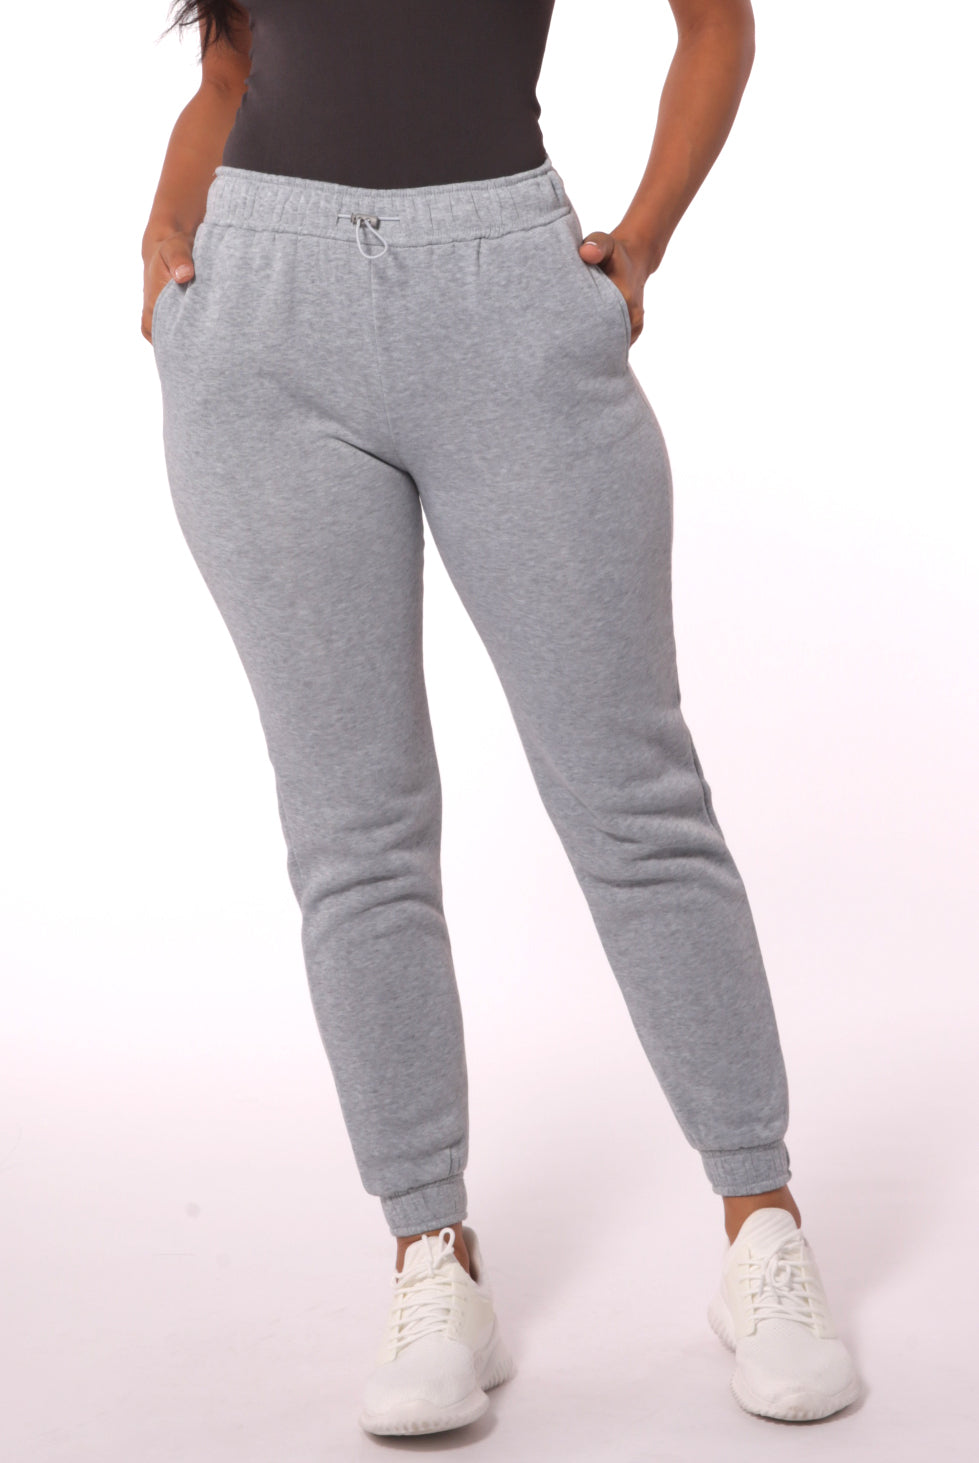 Fleece Lined Sweatpants with Bungee Cord Waist - Light Gray - SHOSHO Fashion